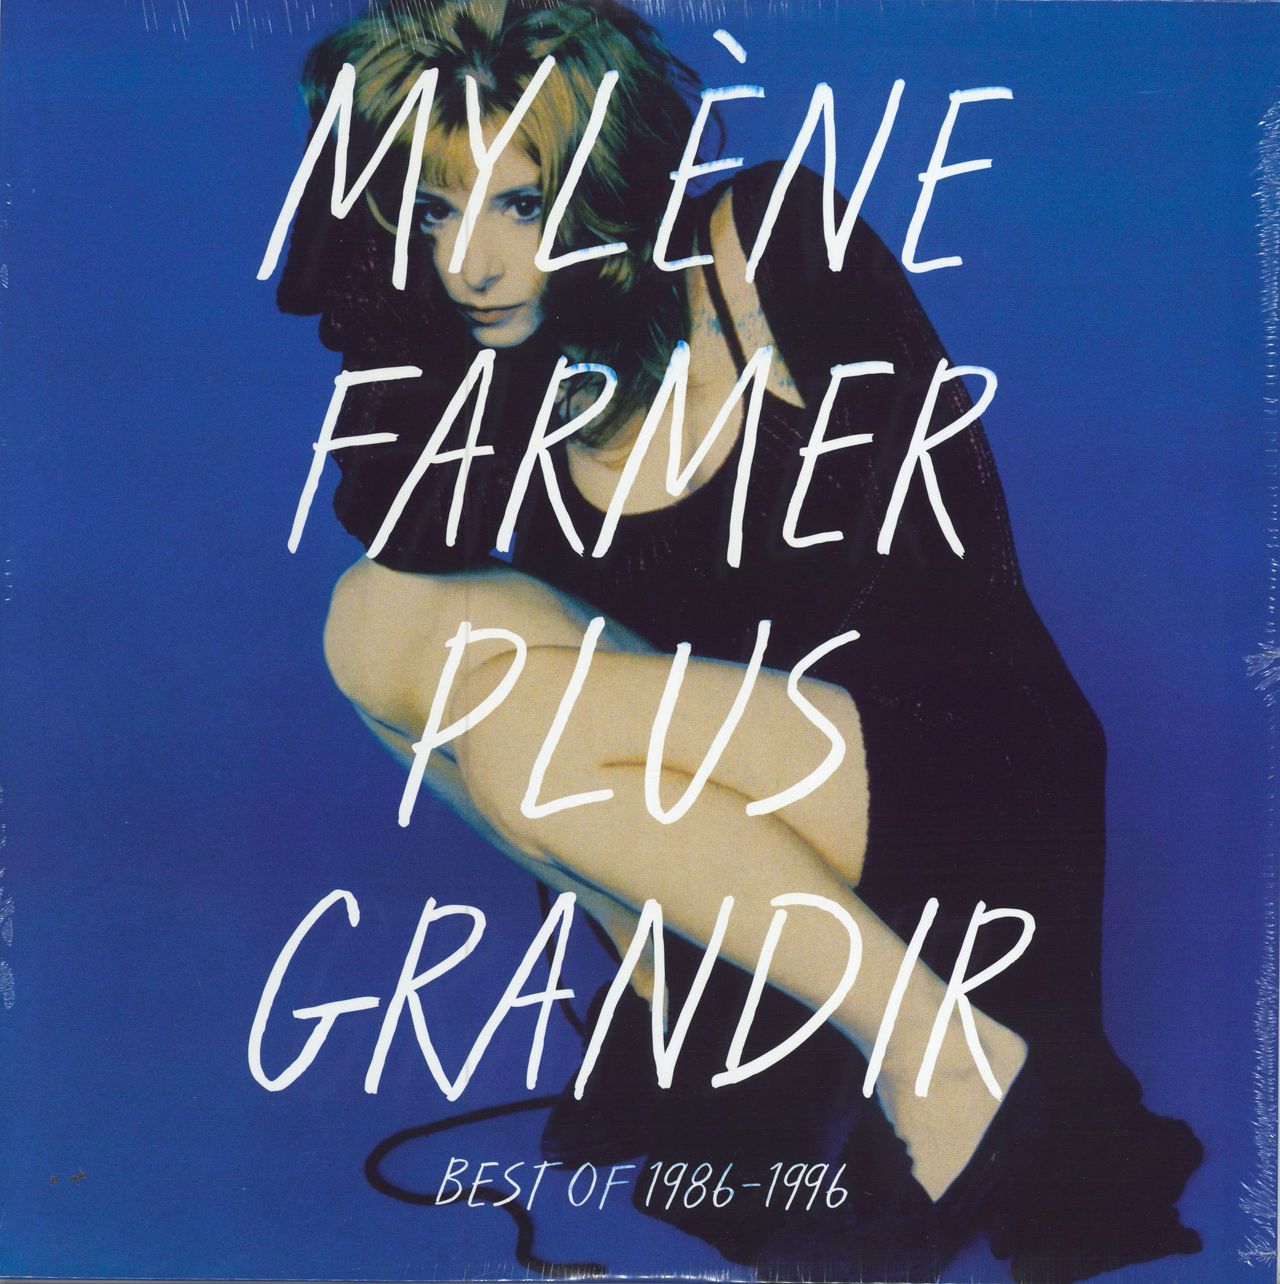 Mylene Farmer Plus Grandir: Best Of 1986-1996 - Sealed French 2-LP vinyl record set (Double LP Album) 5394161